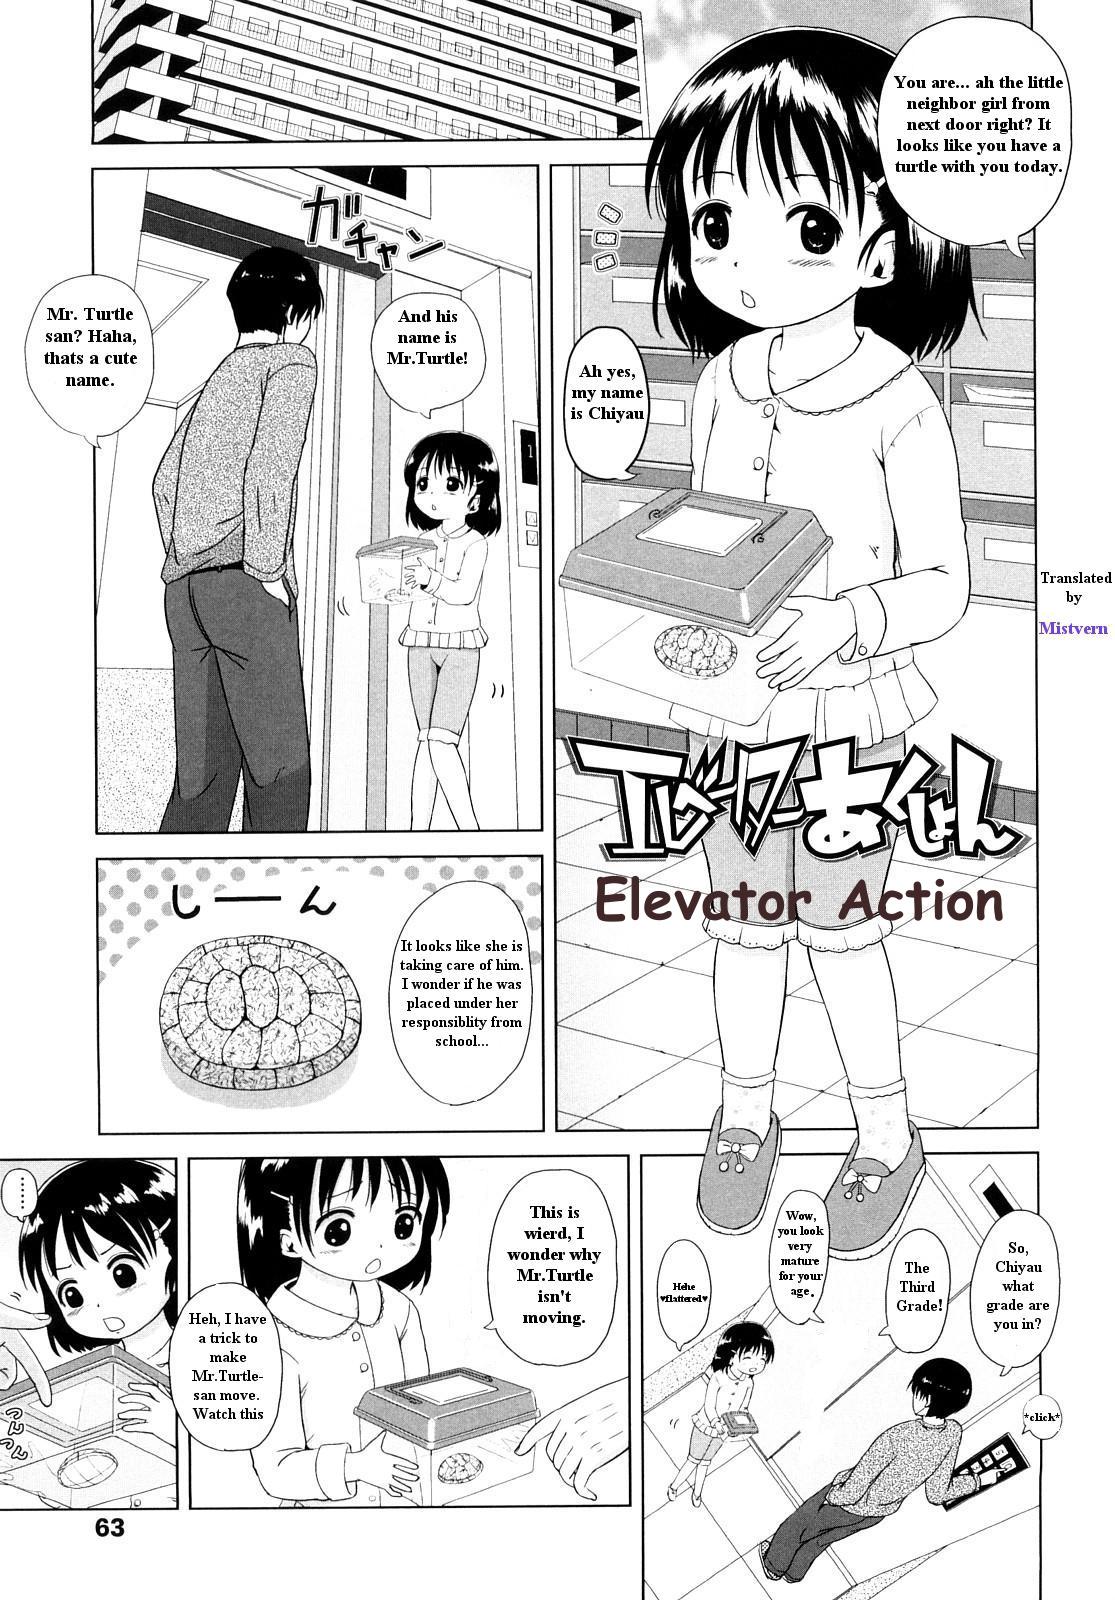 Elevator Action (old) <- Expunge 0